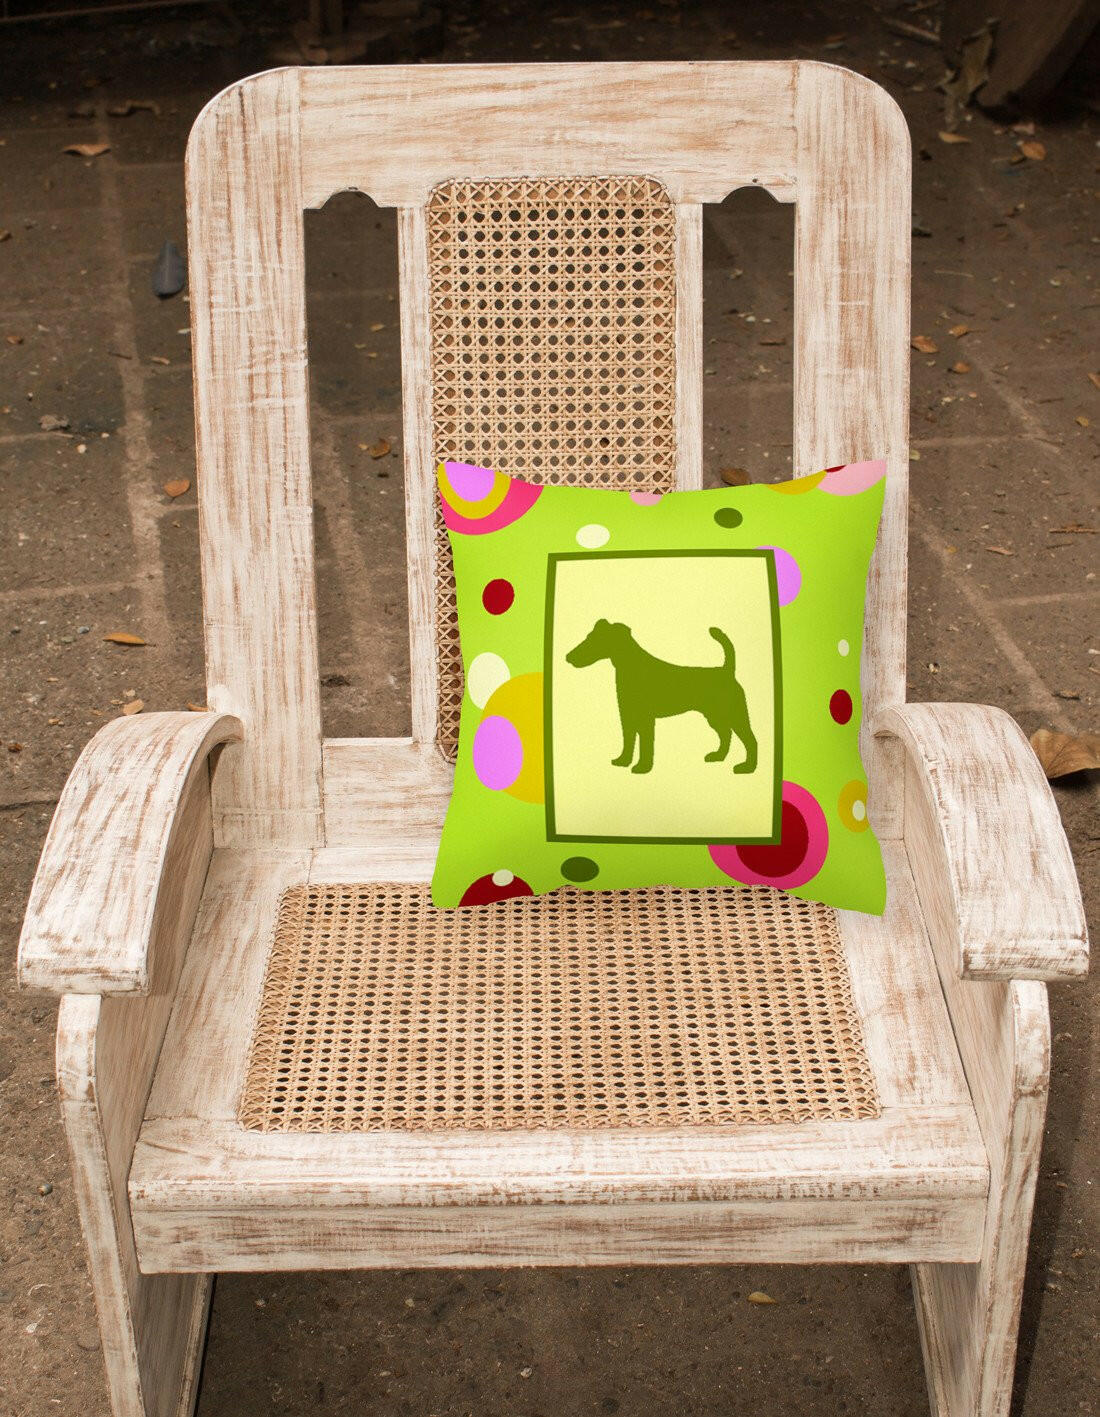 Fox Terrier Decorative   Canvas Fabric Pillow by Caroline's Treasures